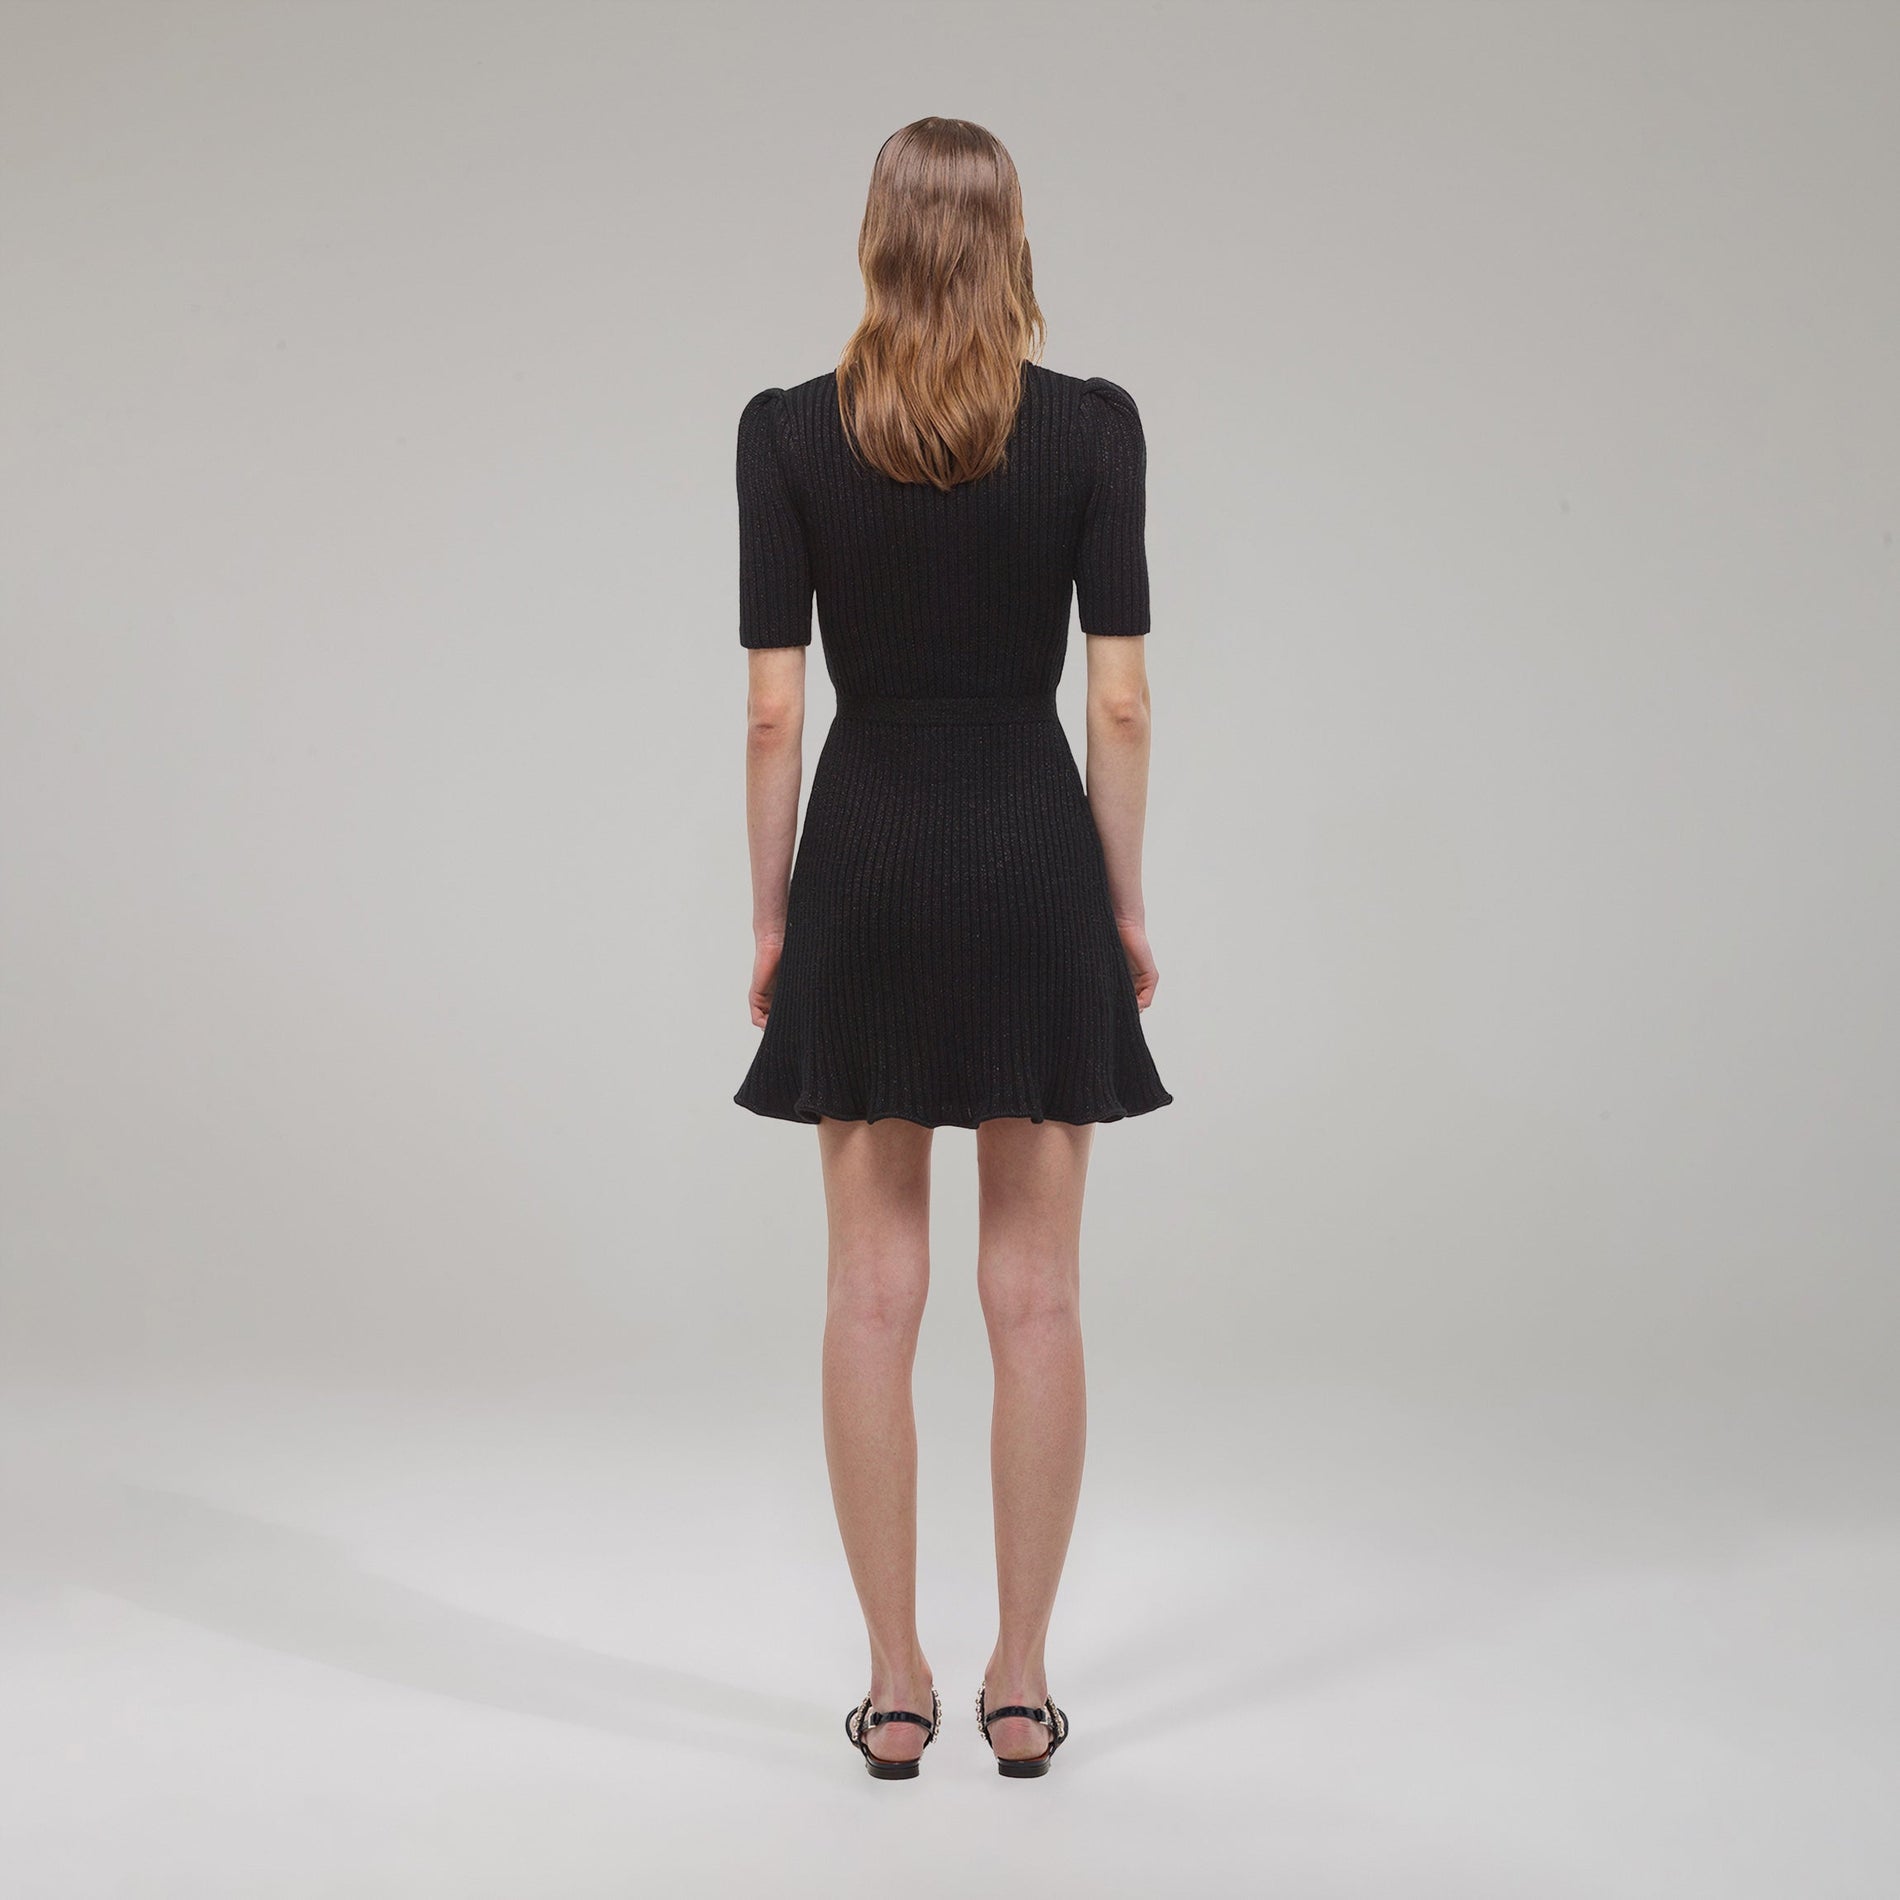 A woman wearing the Black Lurex Contrast Trim Mini Dress